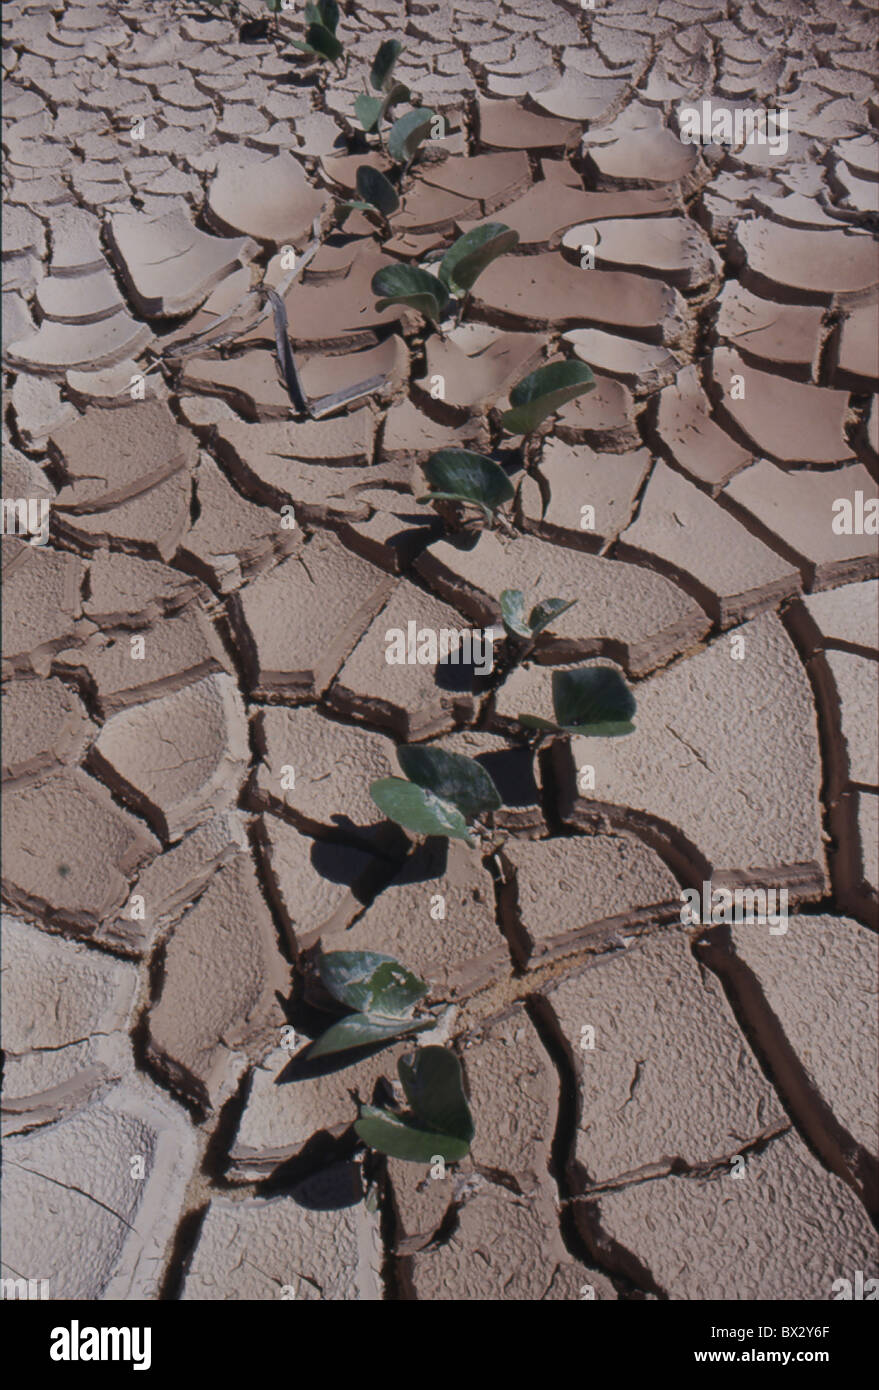 desert loam dry tears leaves plants lives nature heat dryness Stock Photo